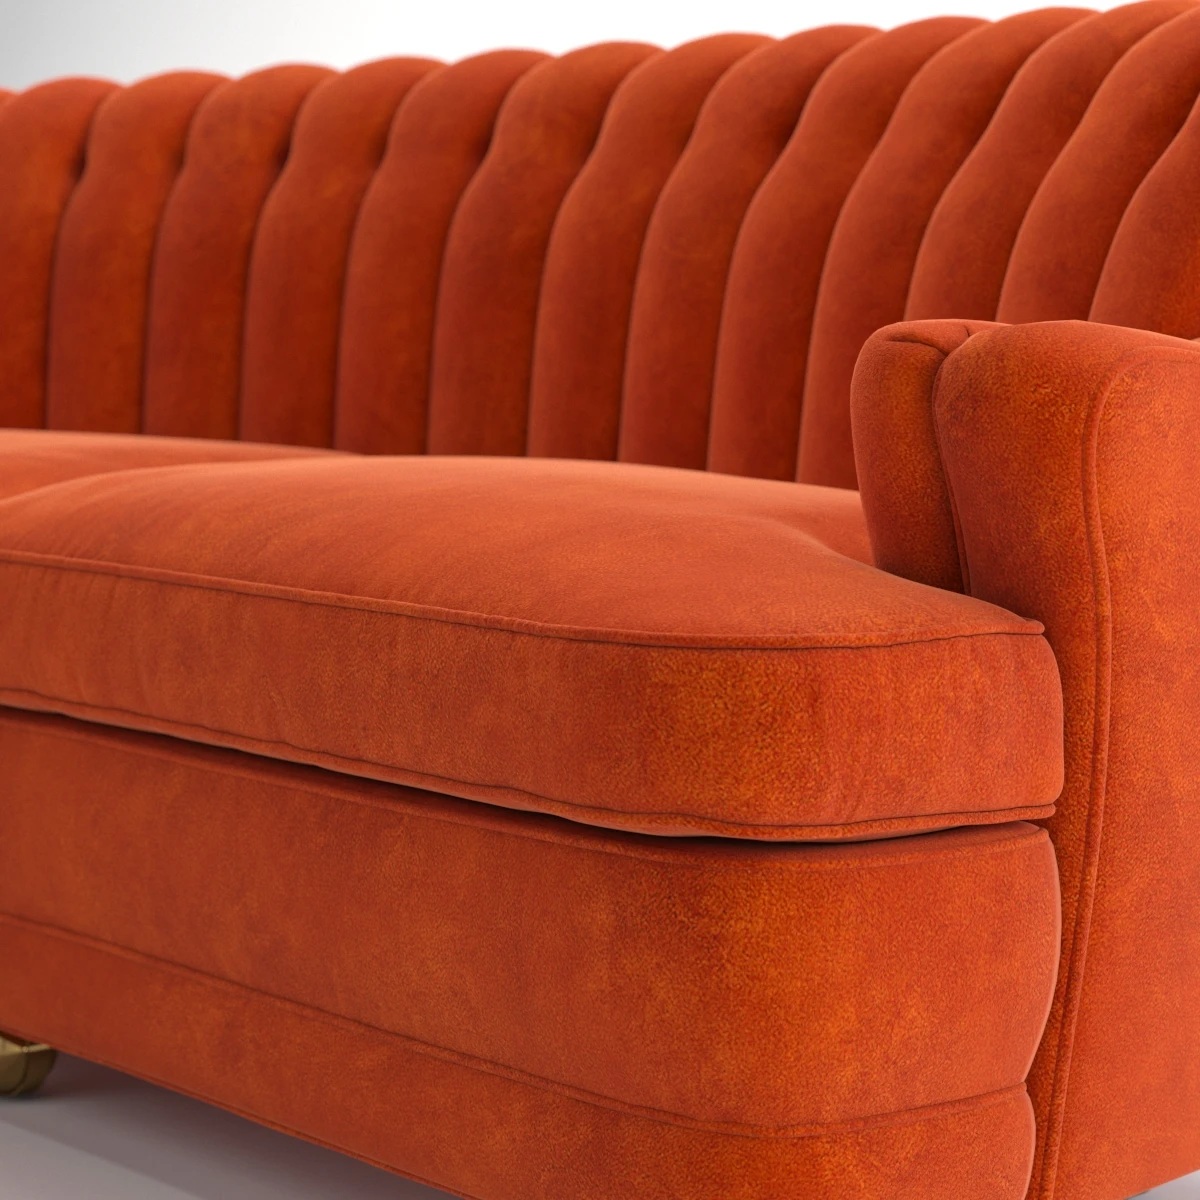 Vintage Couch Furniture Retro Orange Couch 3D Model_06